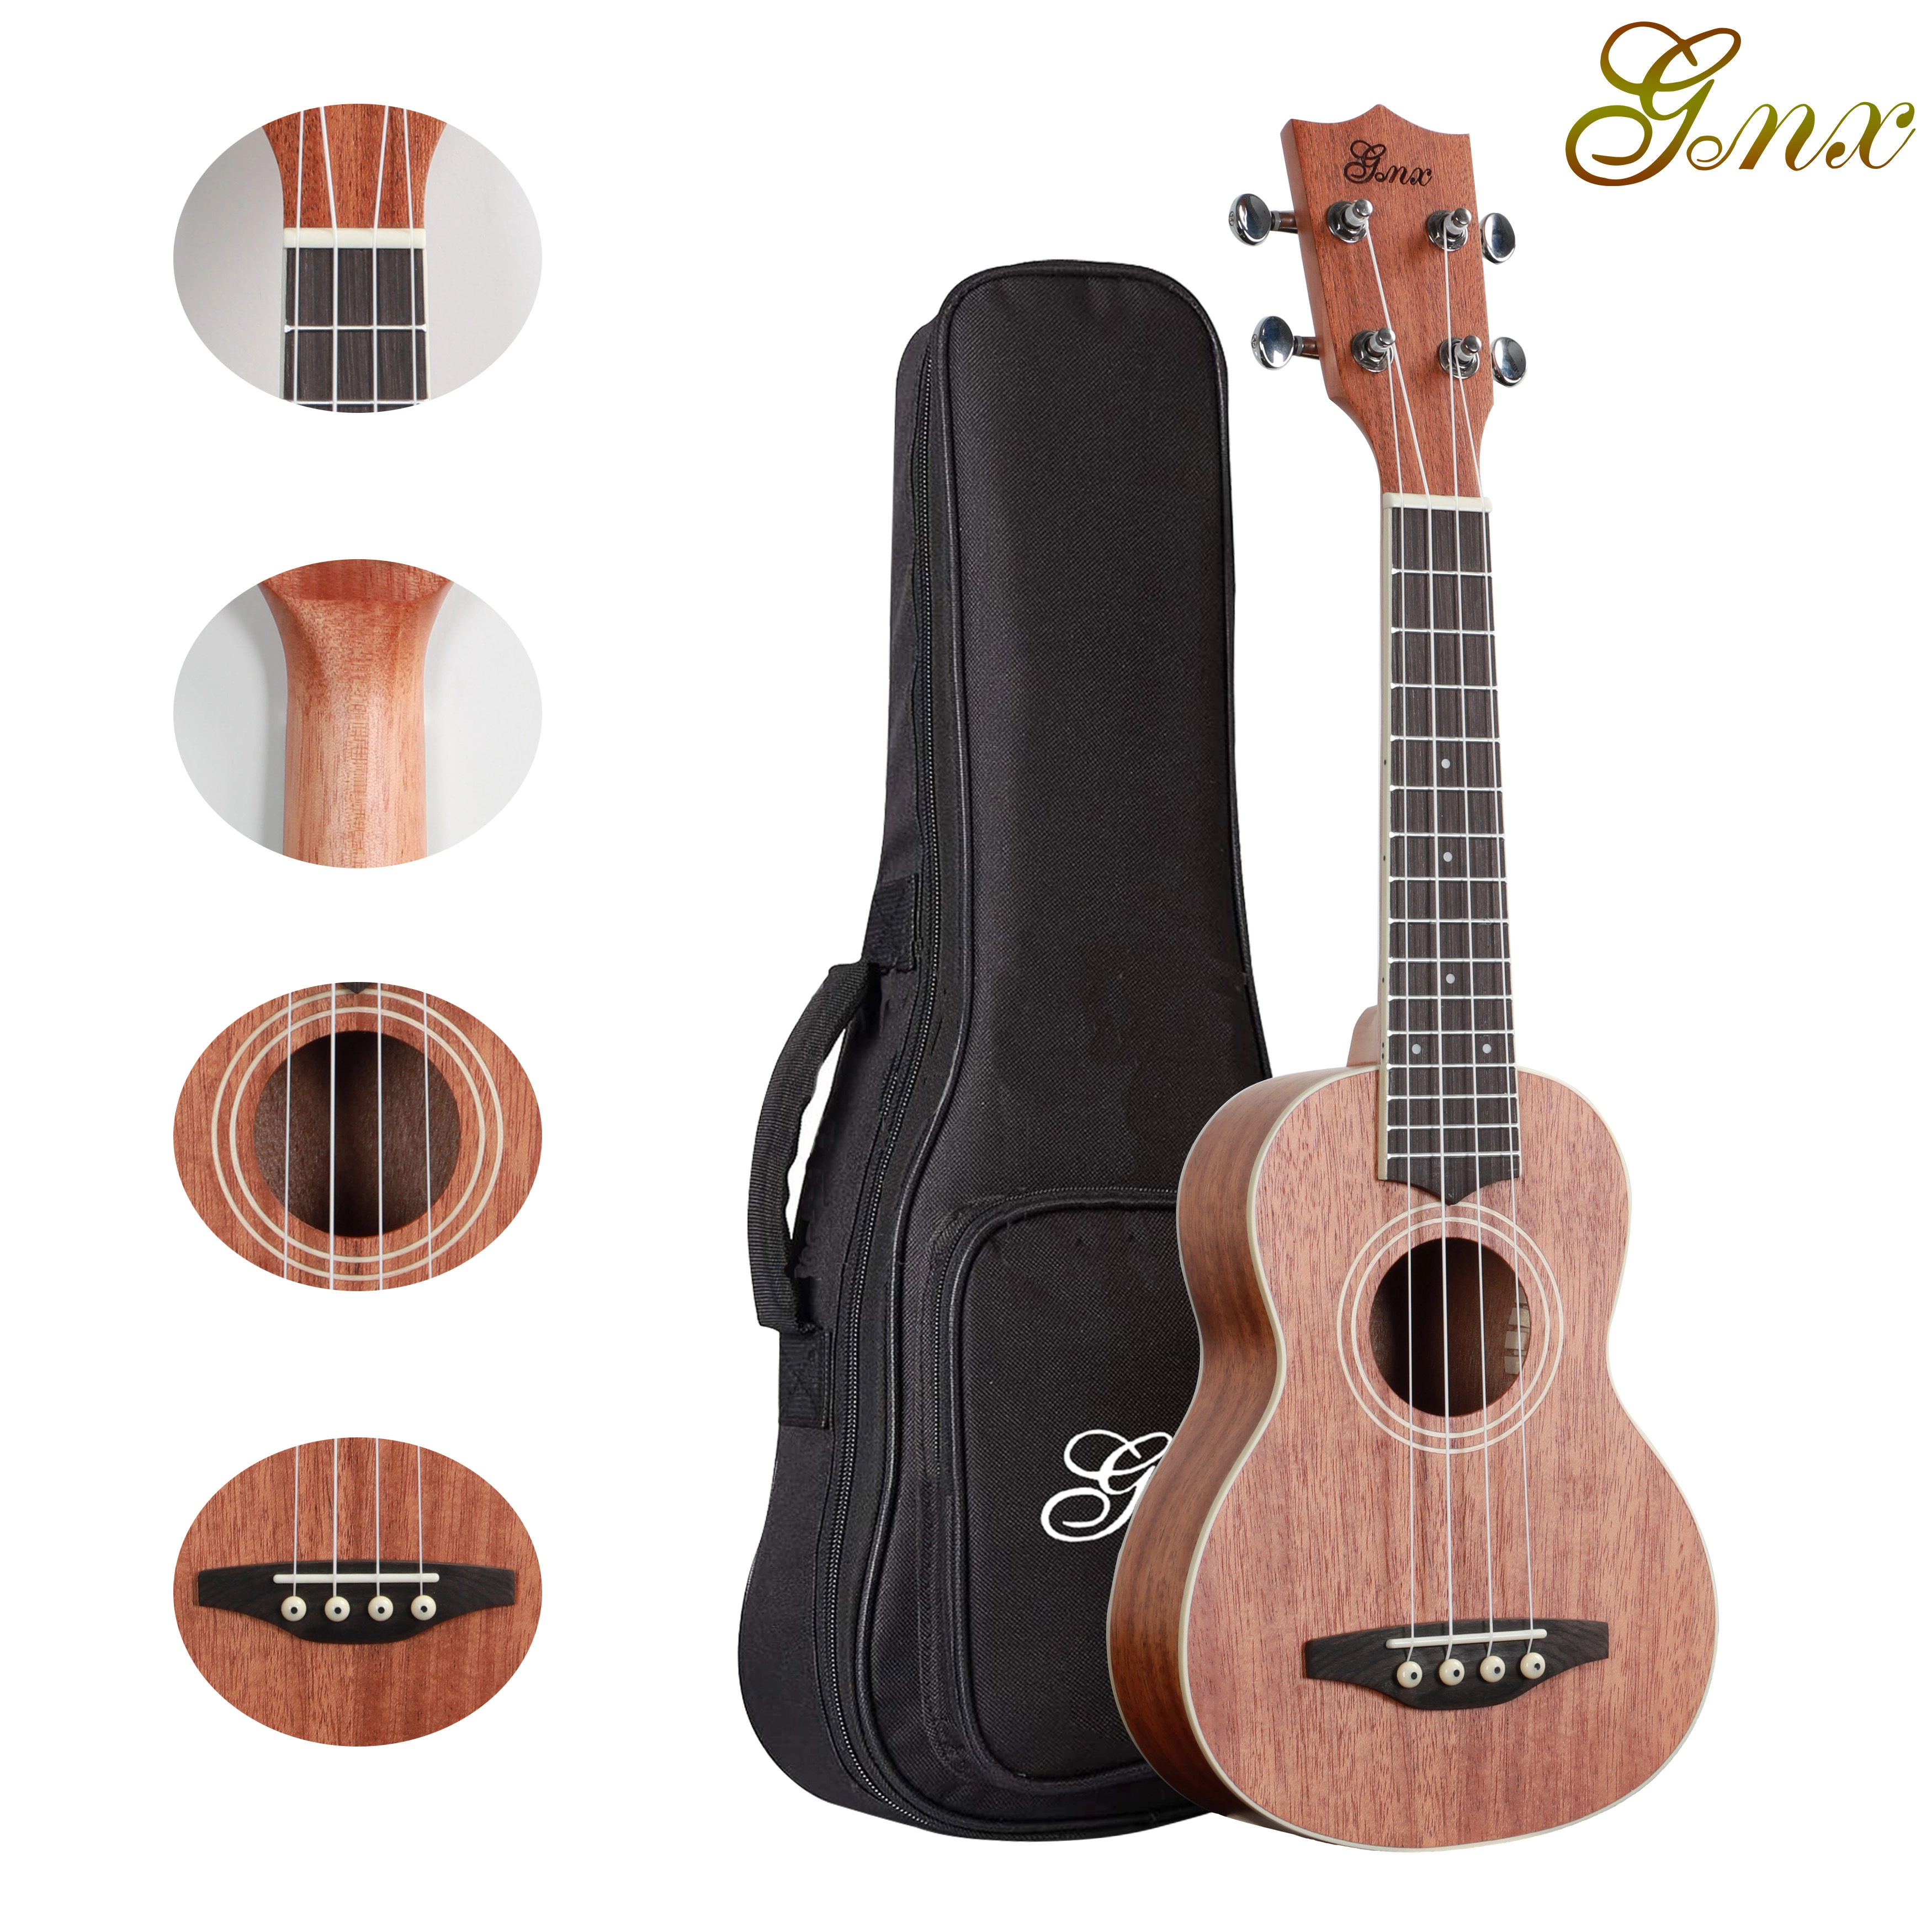 China Made in China high quality ukulele of Soprano manufacturer